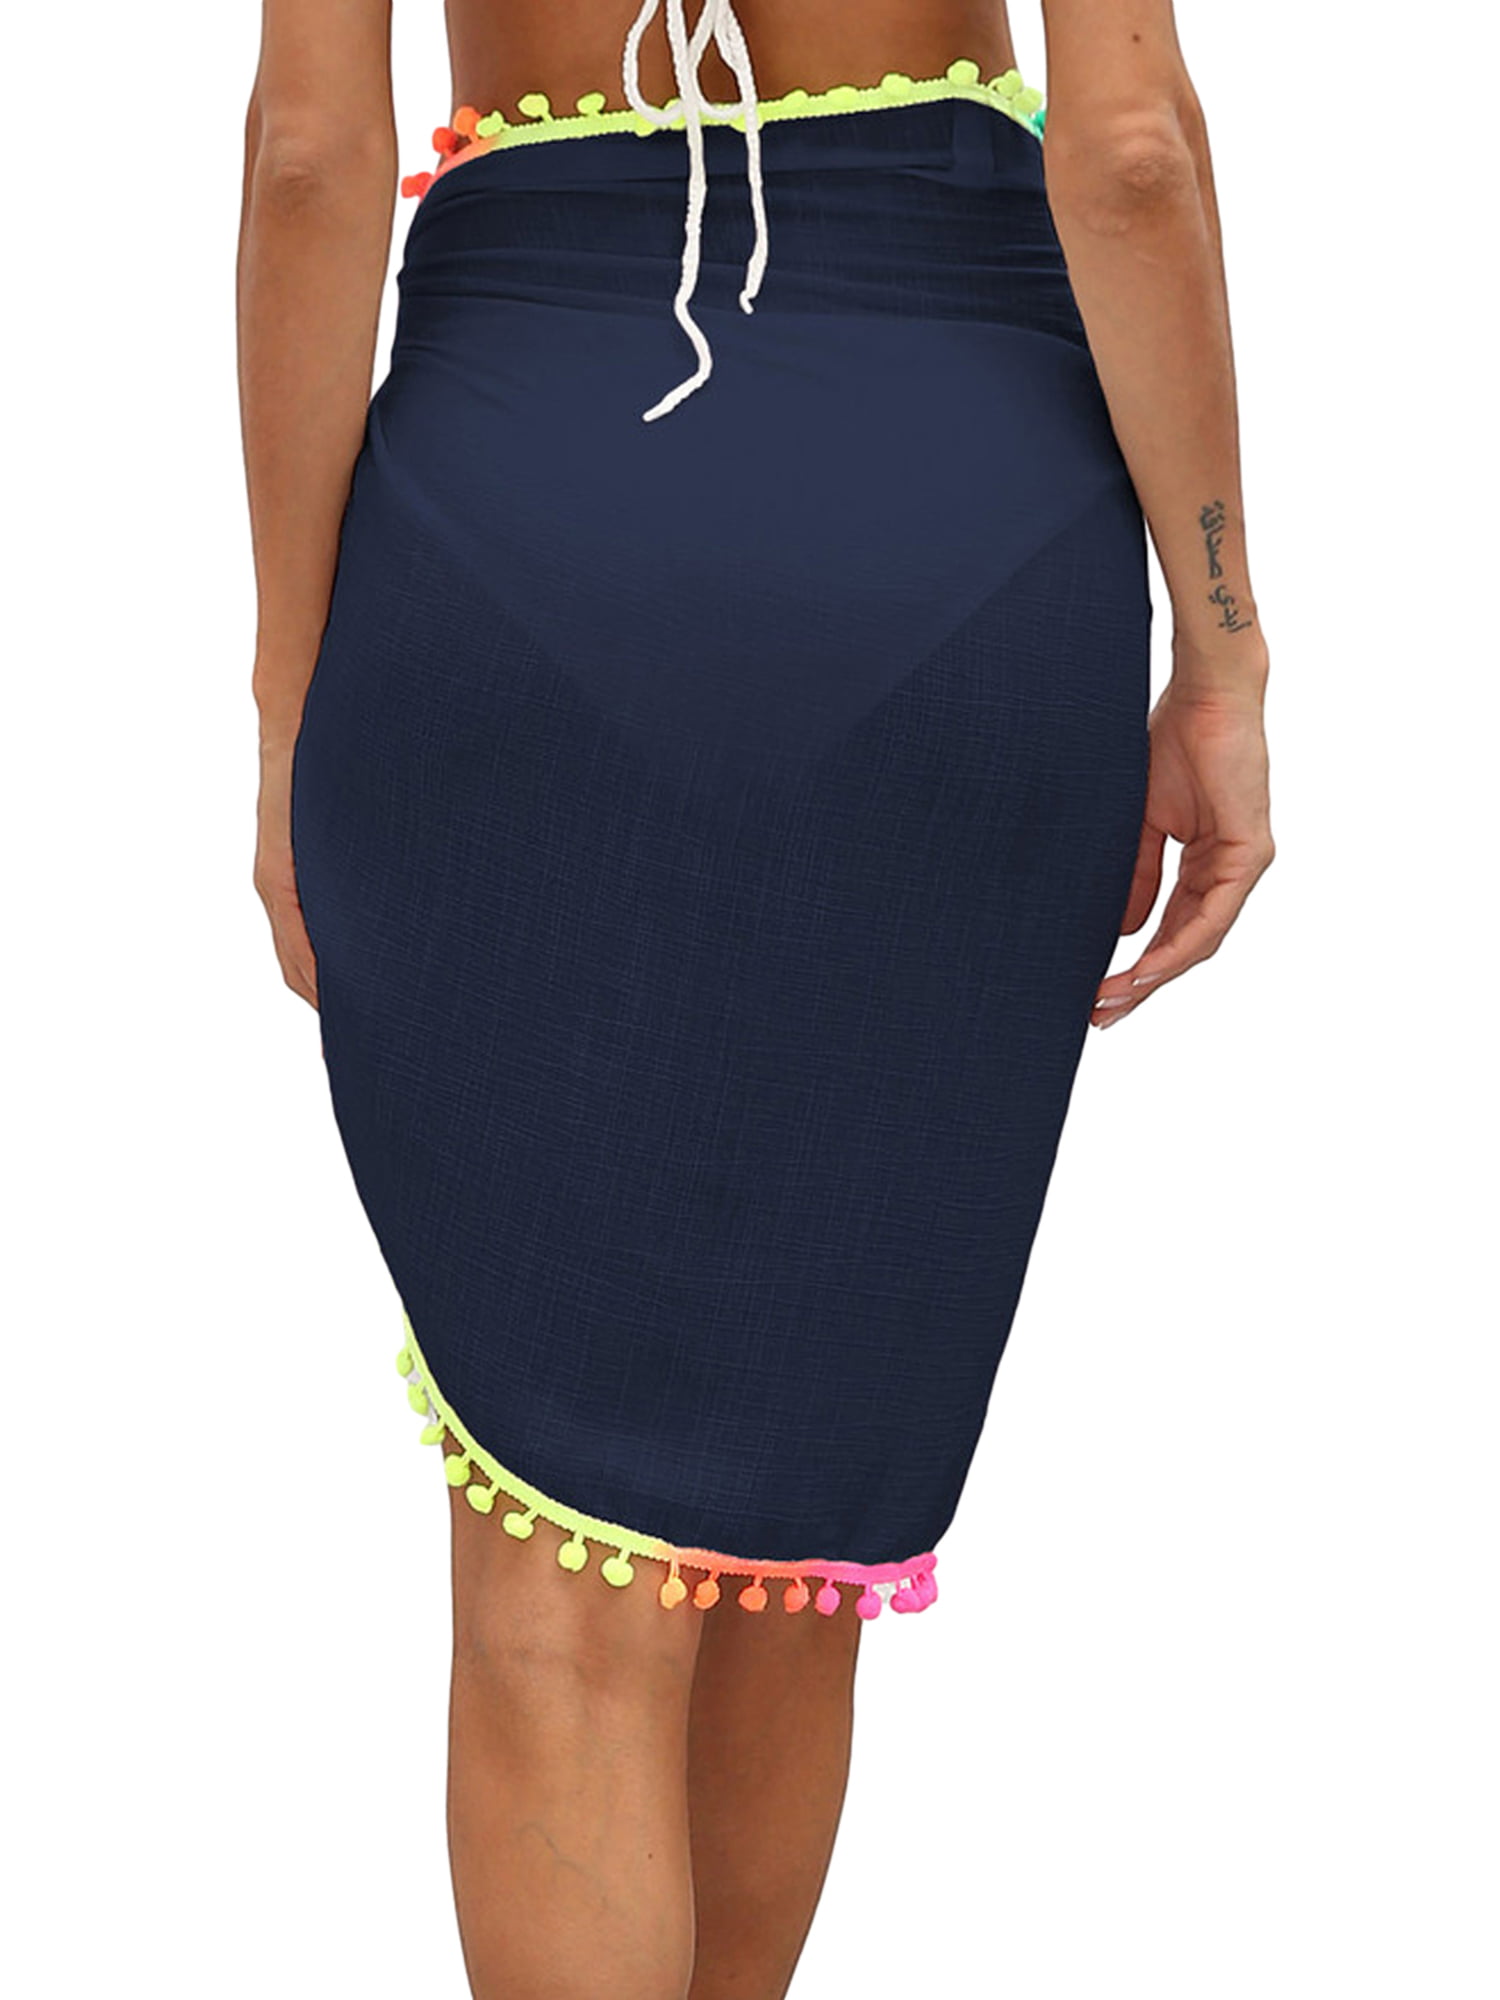 SUNSIOM Women Beach Sarongs Swimsuit Wrap Skirt Bikini Cover with